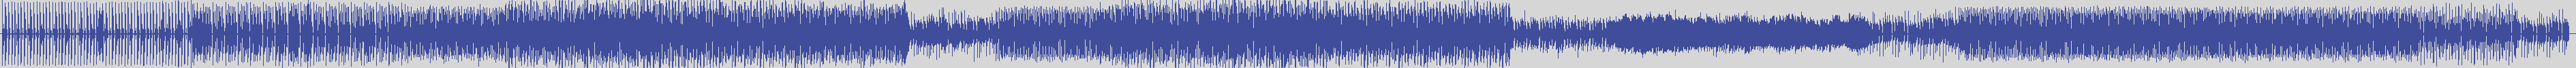 airplane_records [ARP1001] Tommy Vee - Hit That Dancefoor [Original Mix] audio wave form